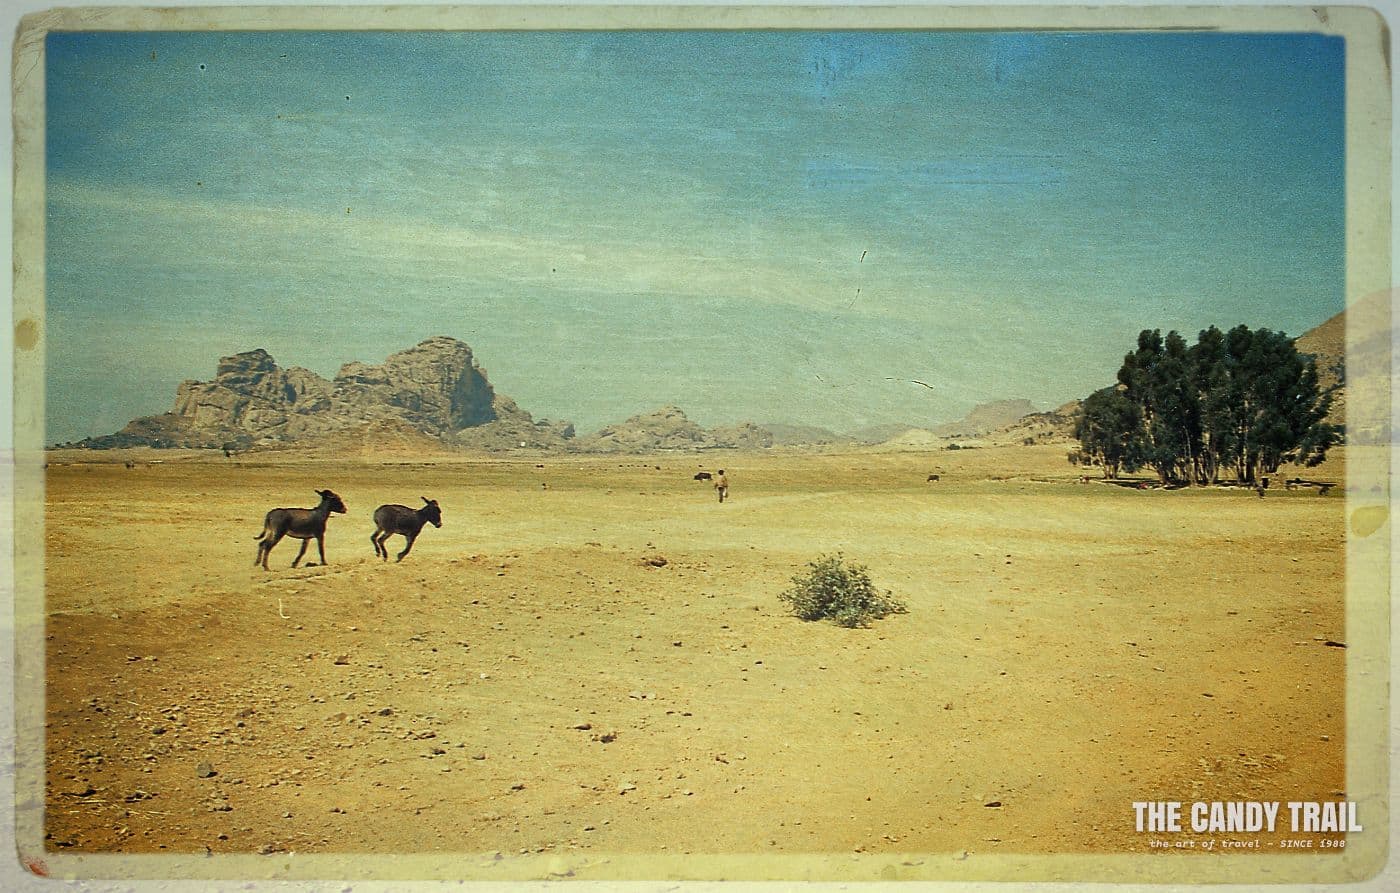 Donkeys running amid the landscape of Matara.